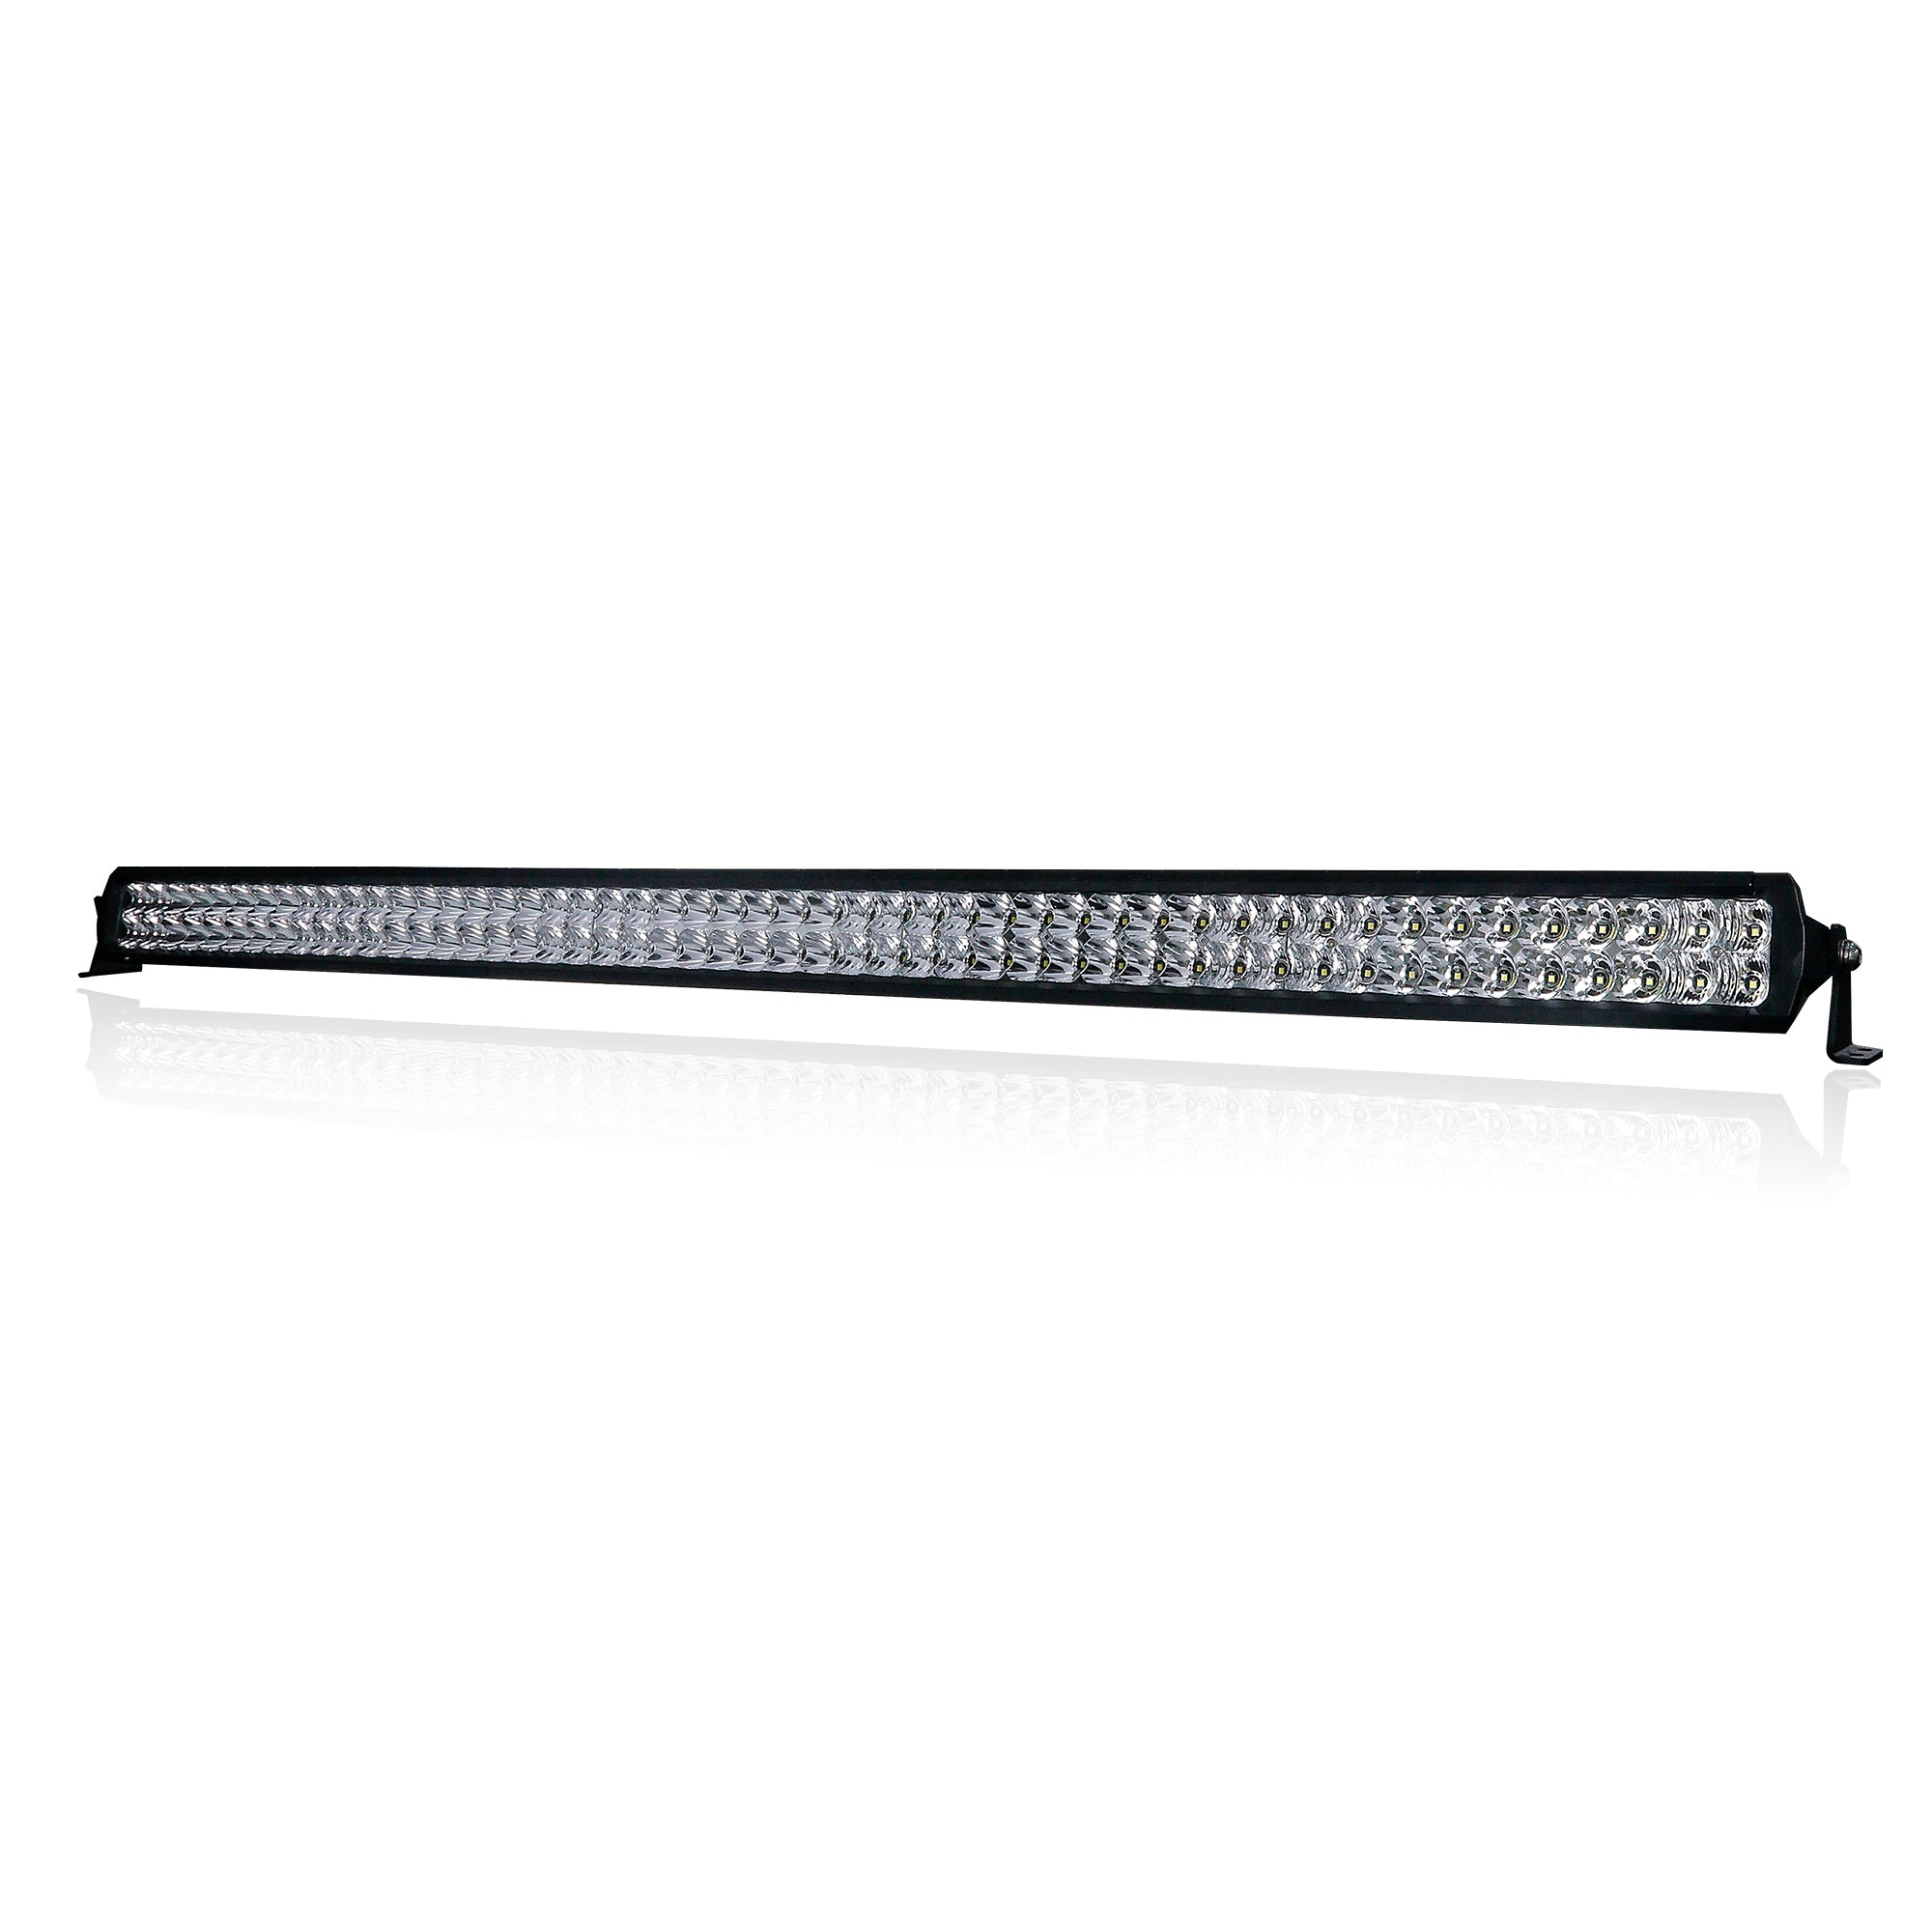 R-Series Light Bar